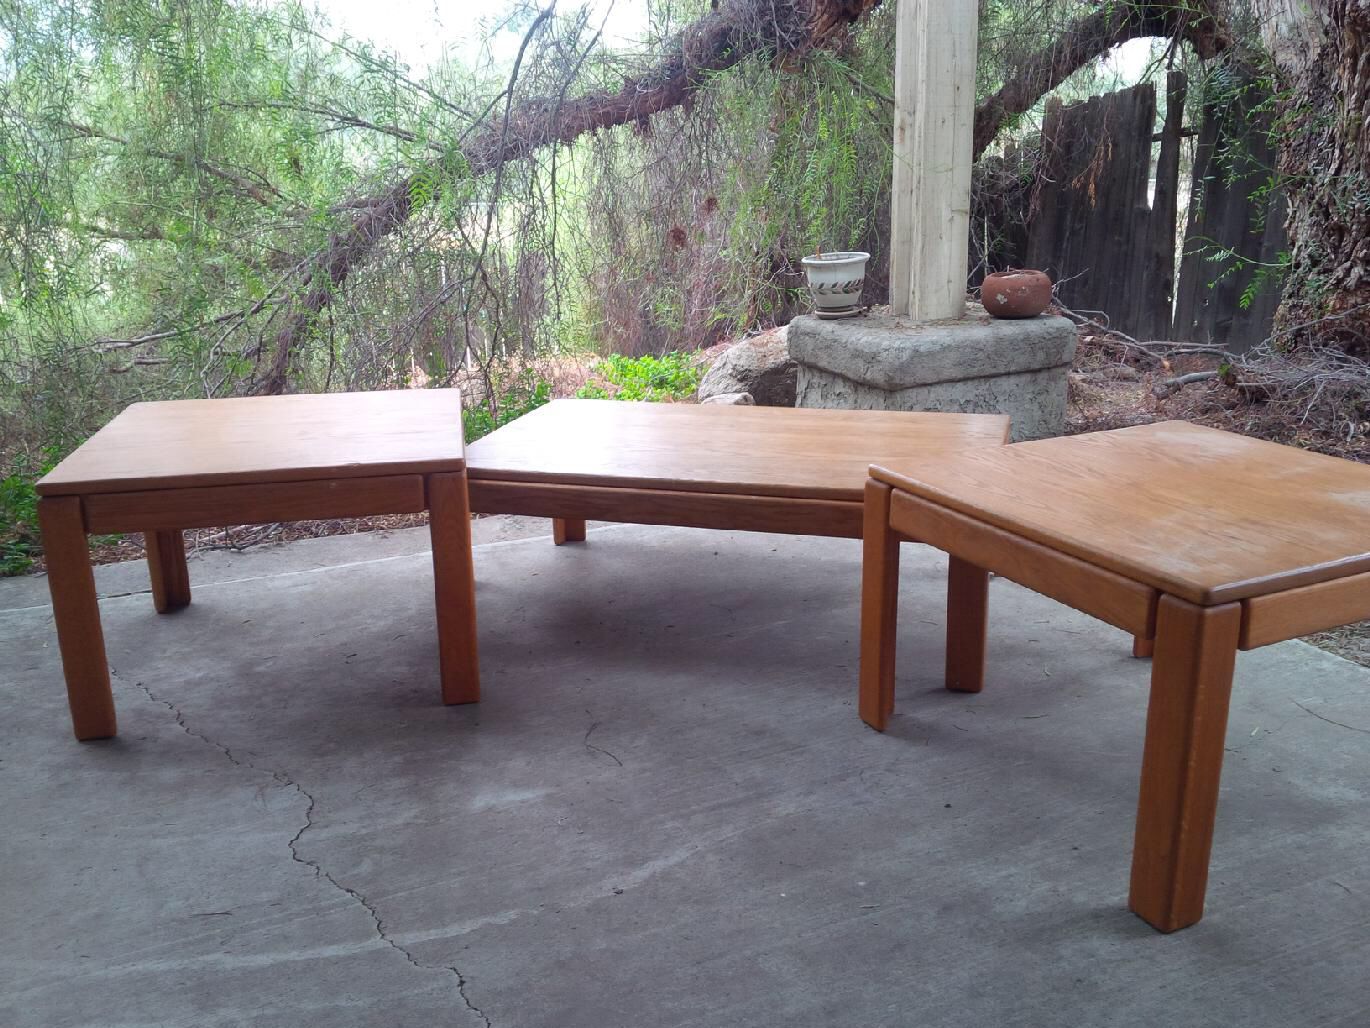 3 matching oak tables